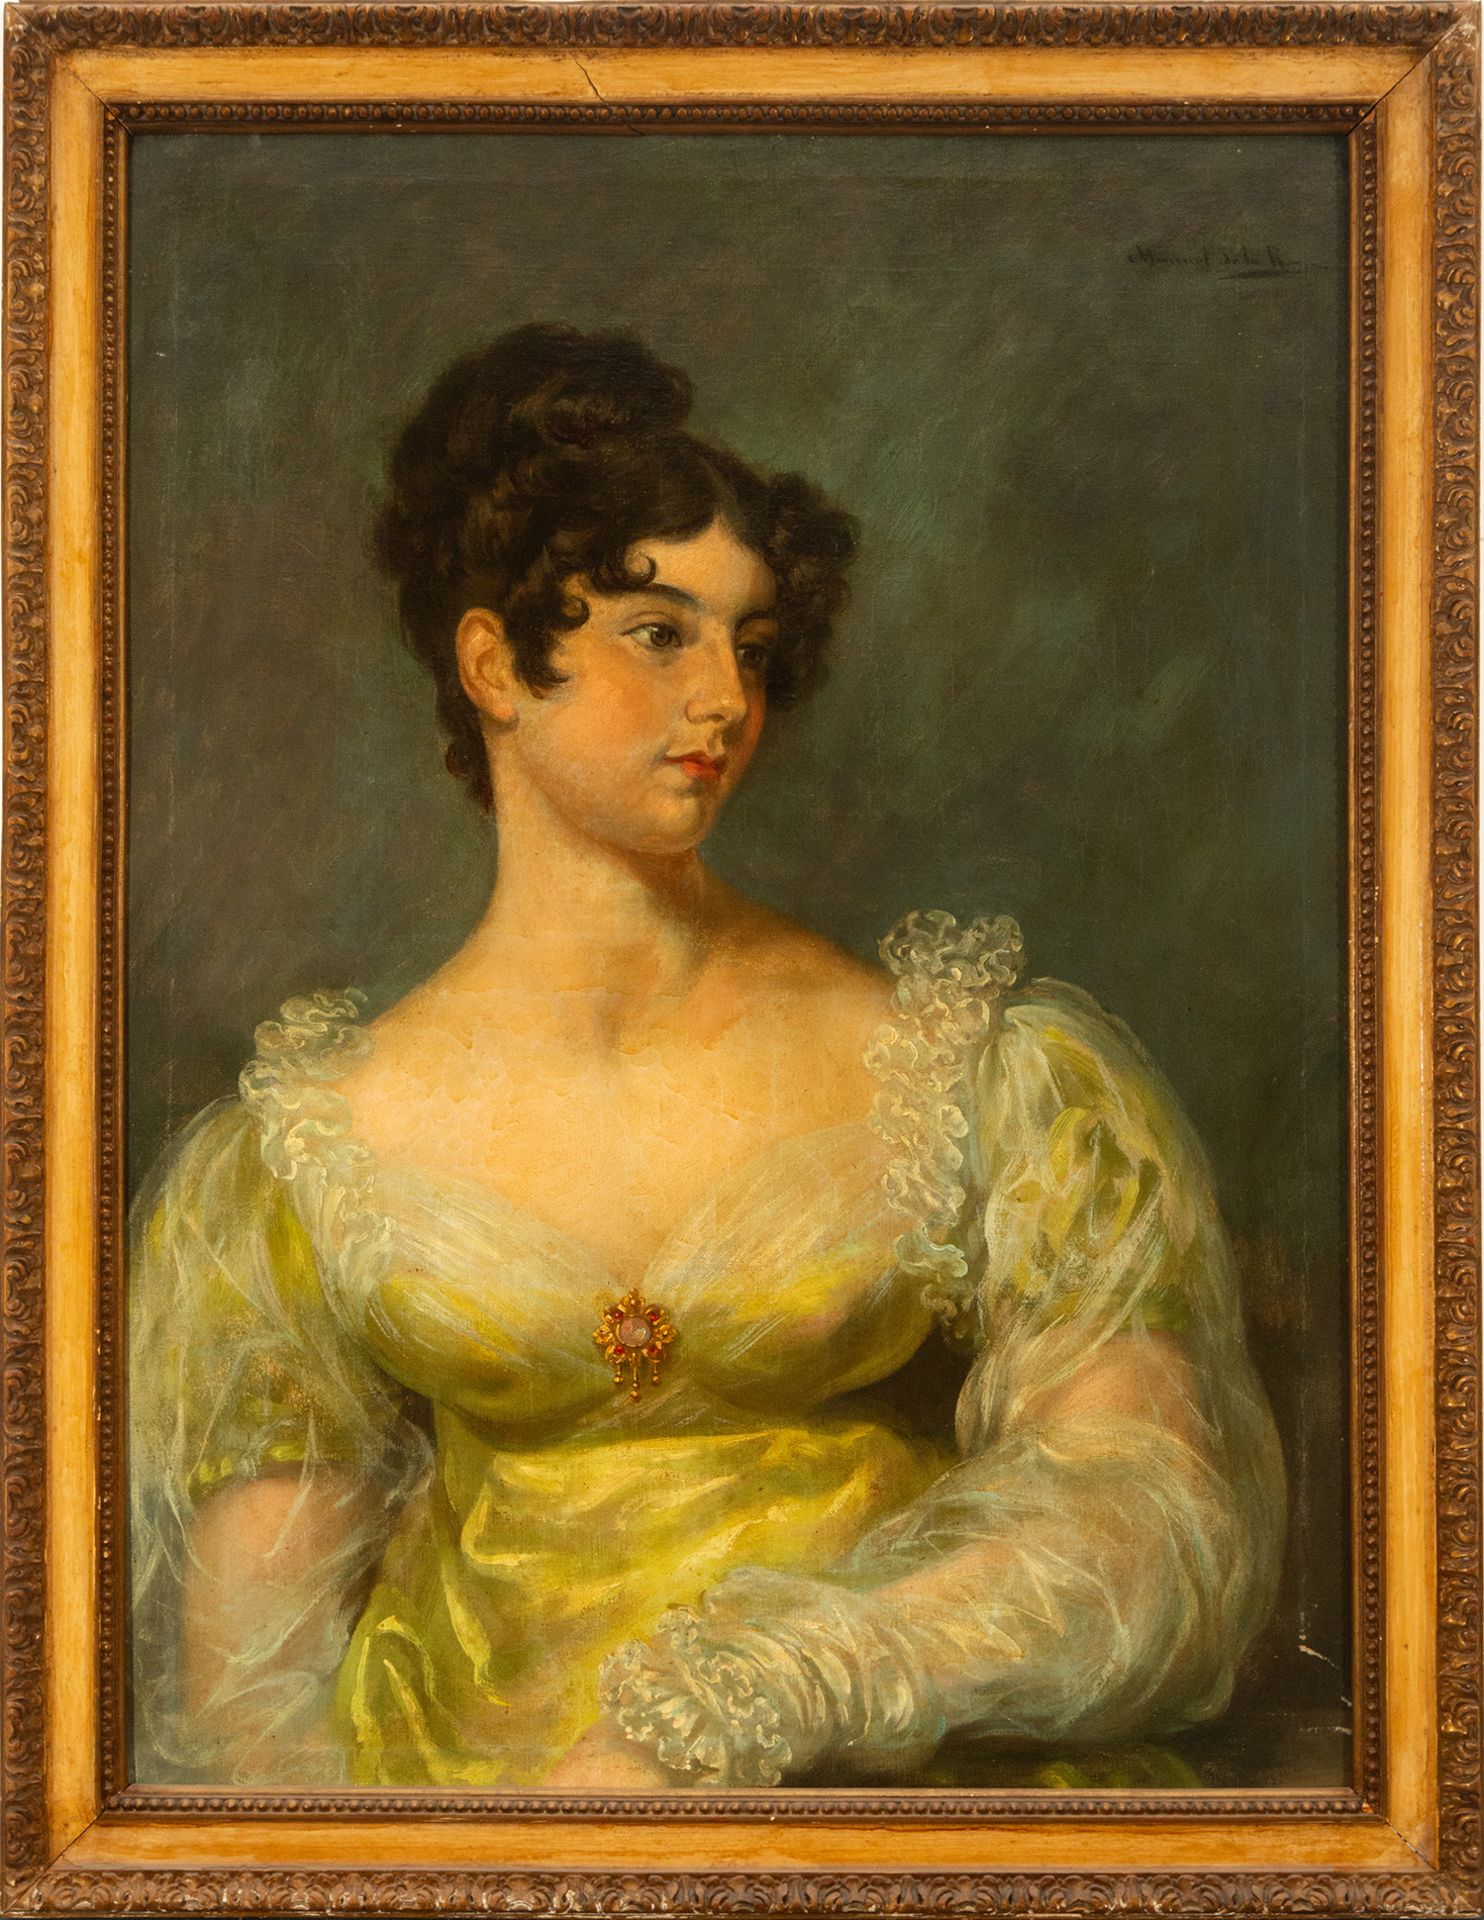 Portrait of Lady, Manuel de la Rosa, 19th century Spanish school